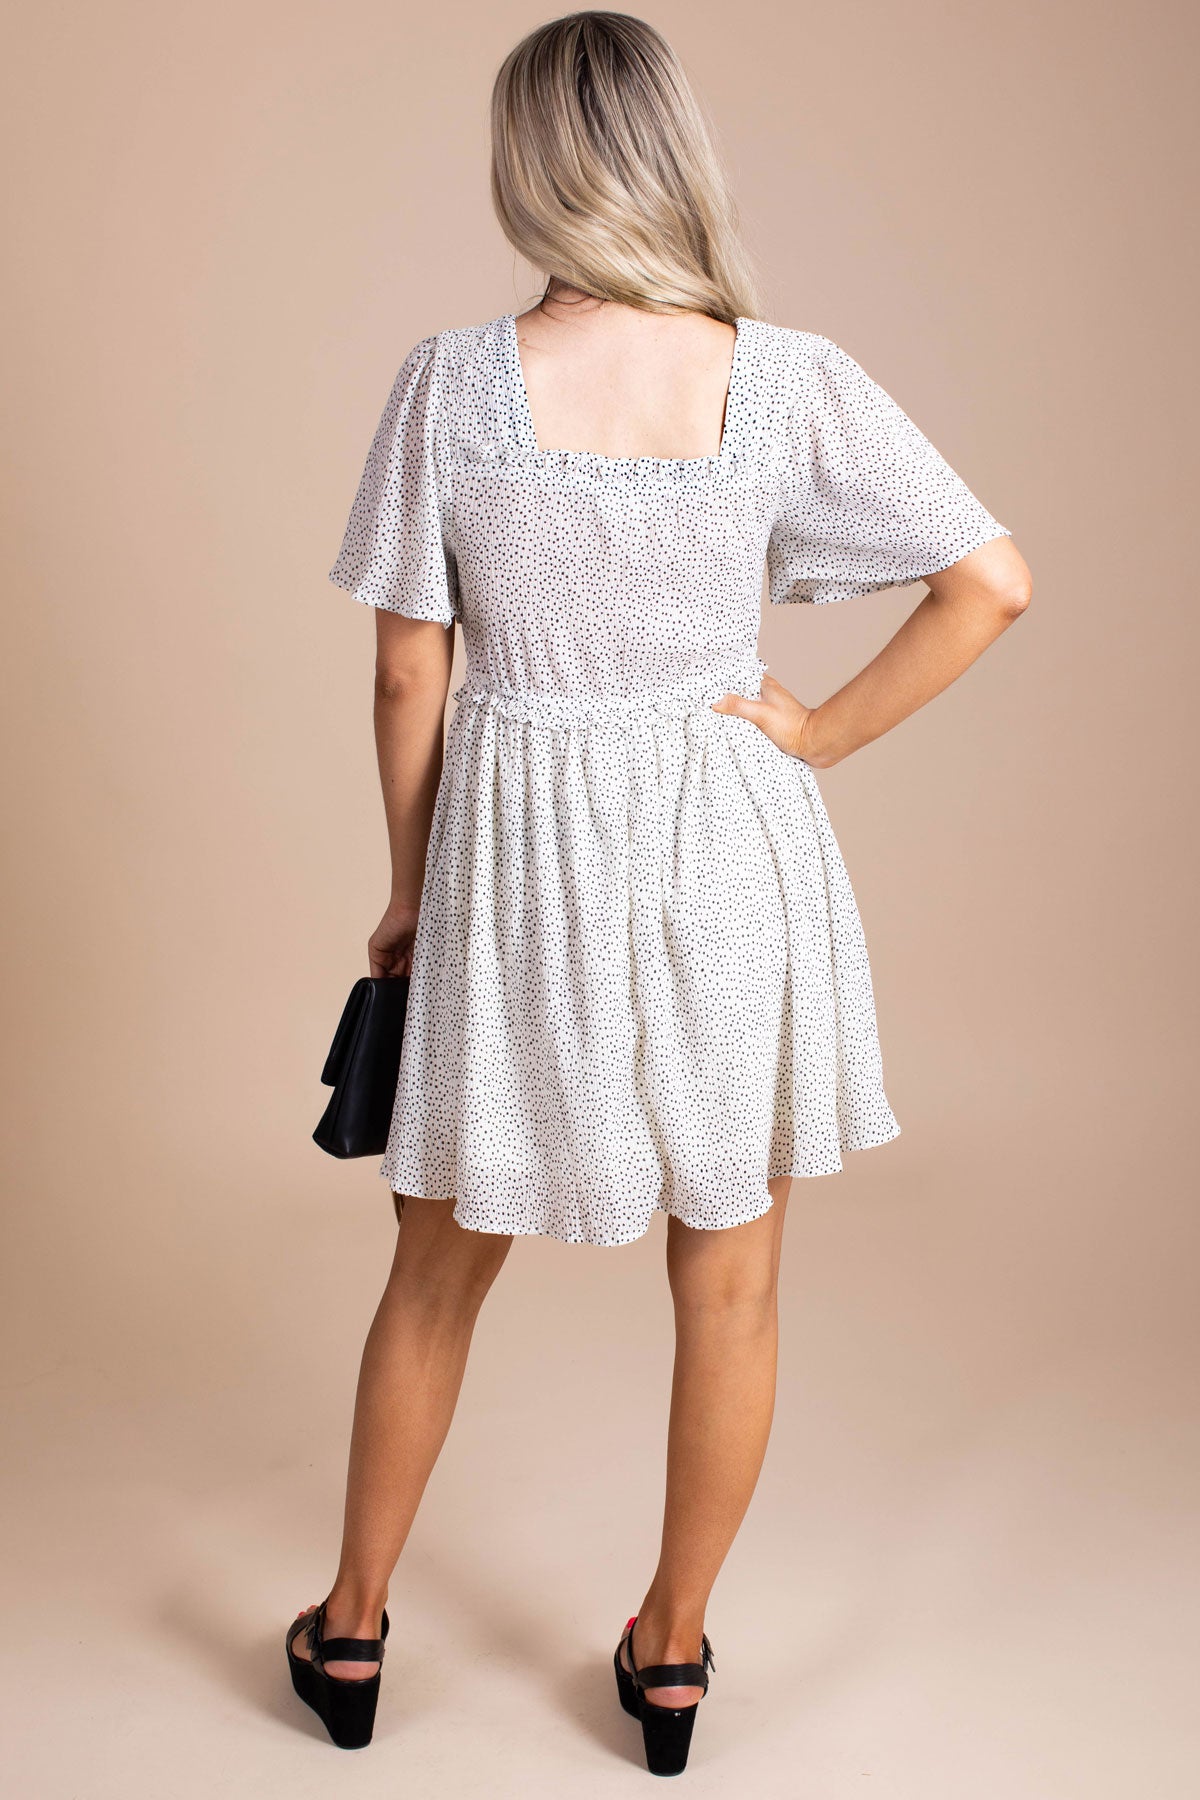 White Smocked boutique Dress